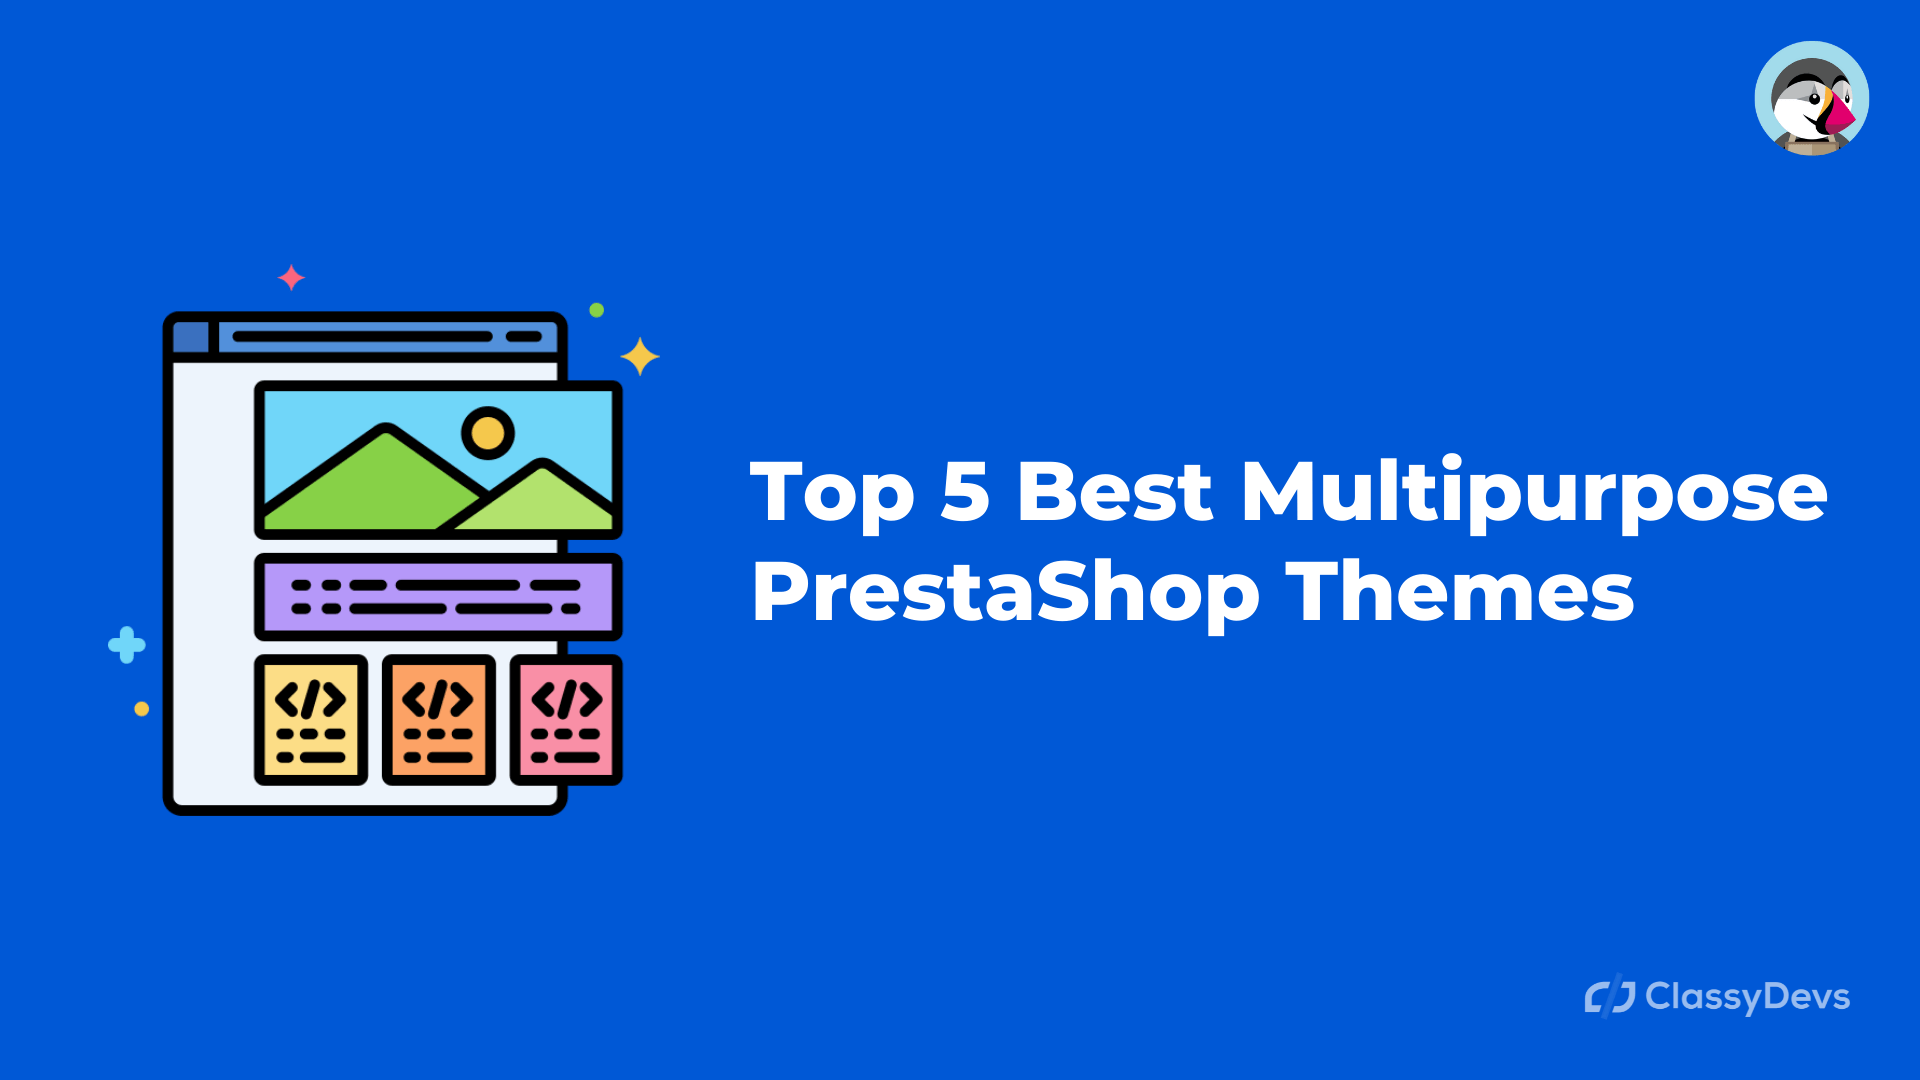 Top 5 Best Multipurpose PrestaShop Themes